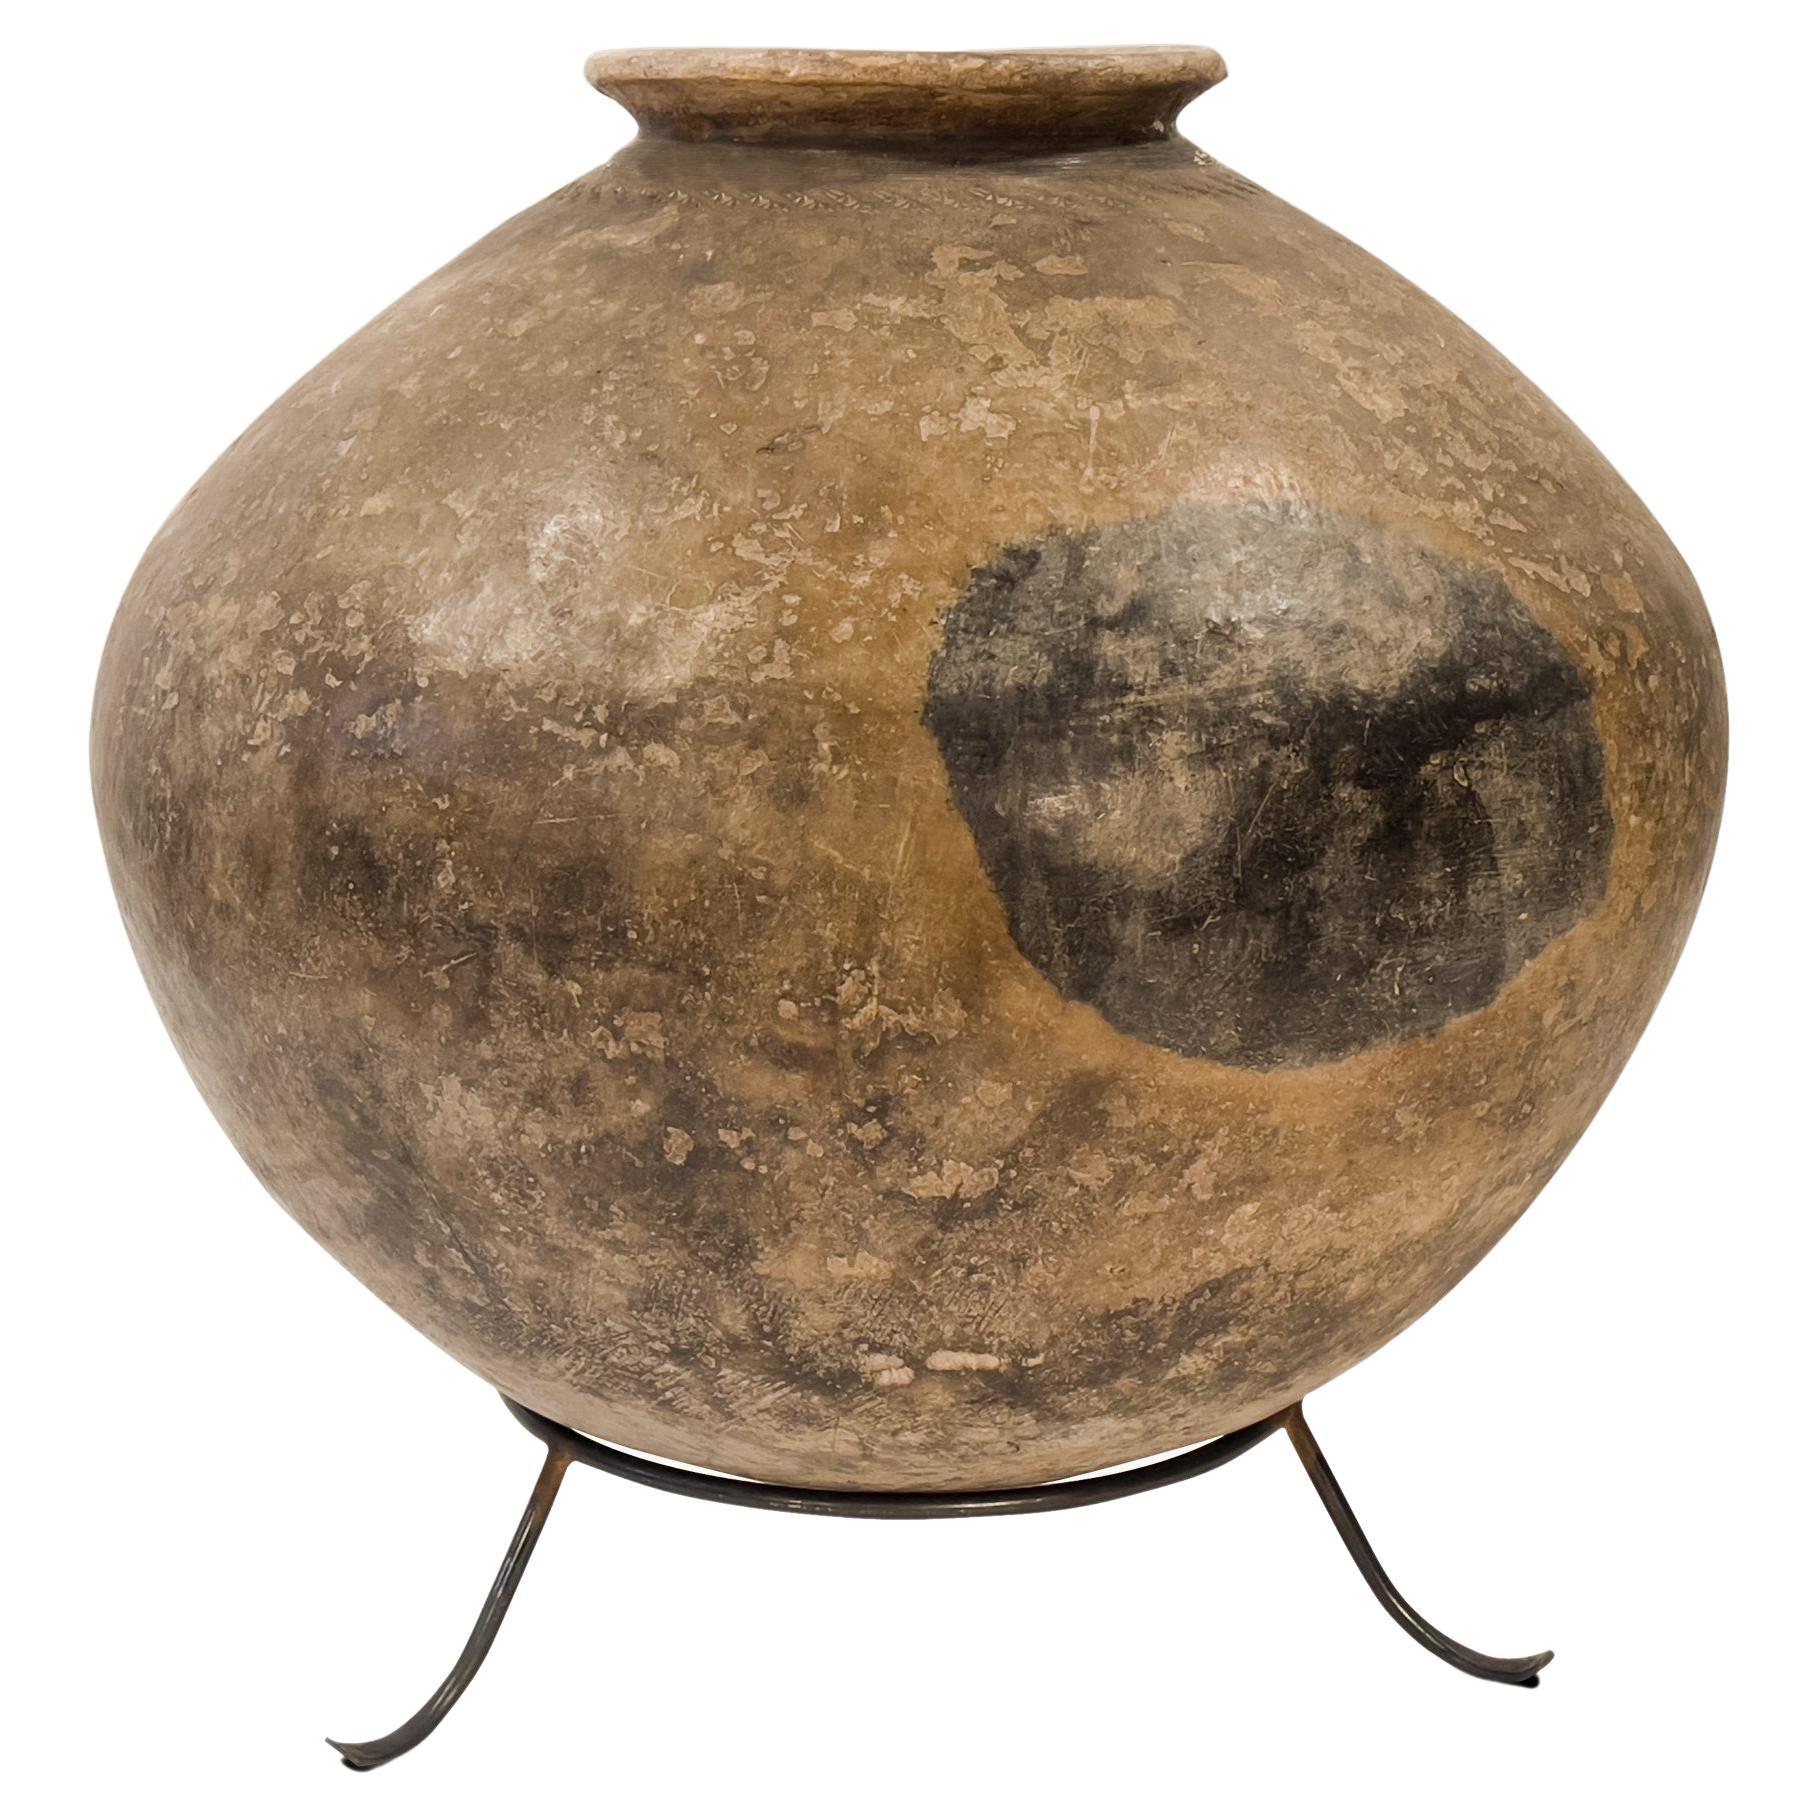 Antique Burmese Organic Clay Terracotta Pot